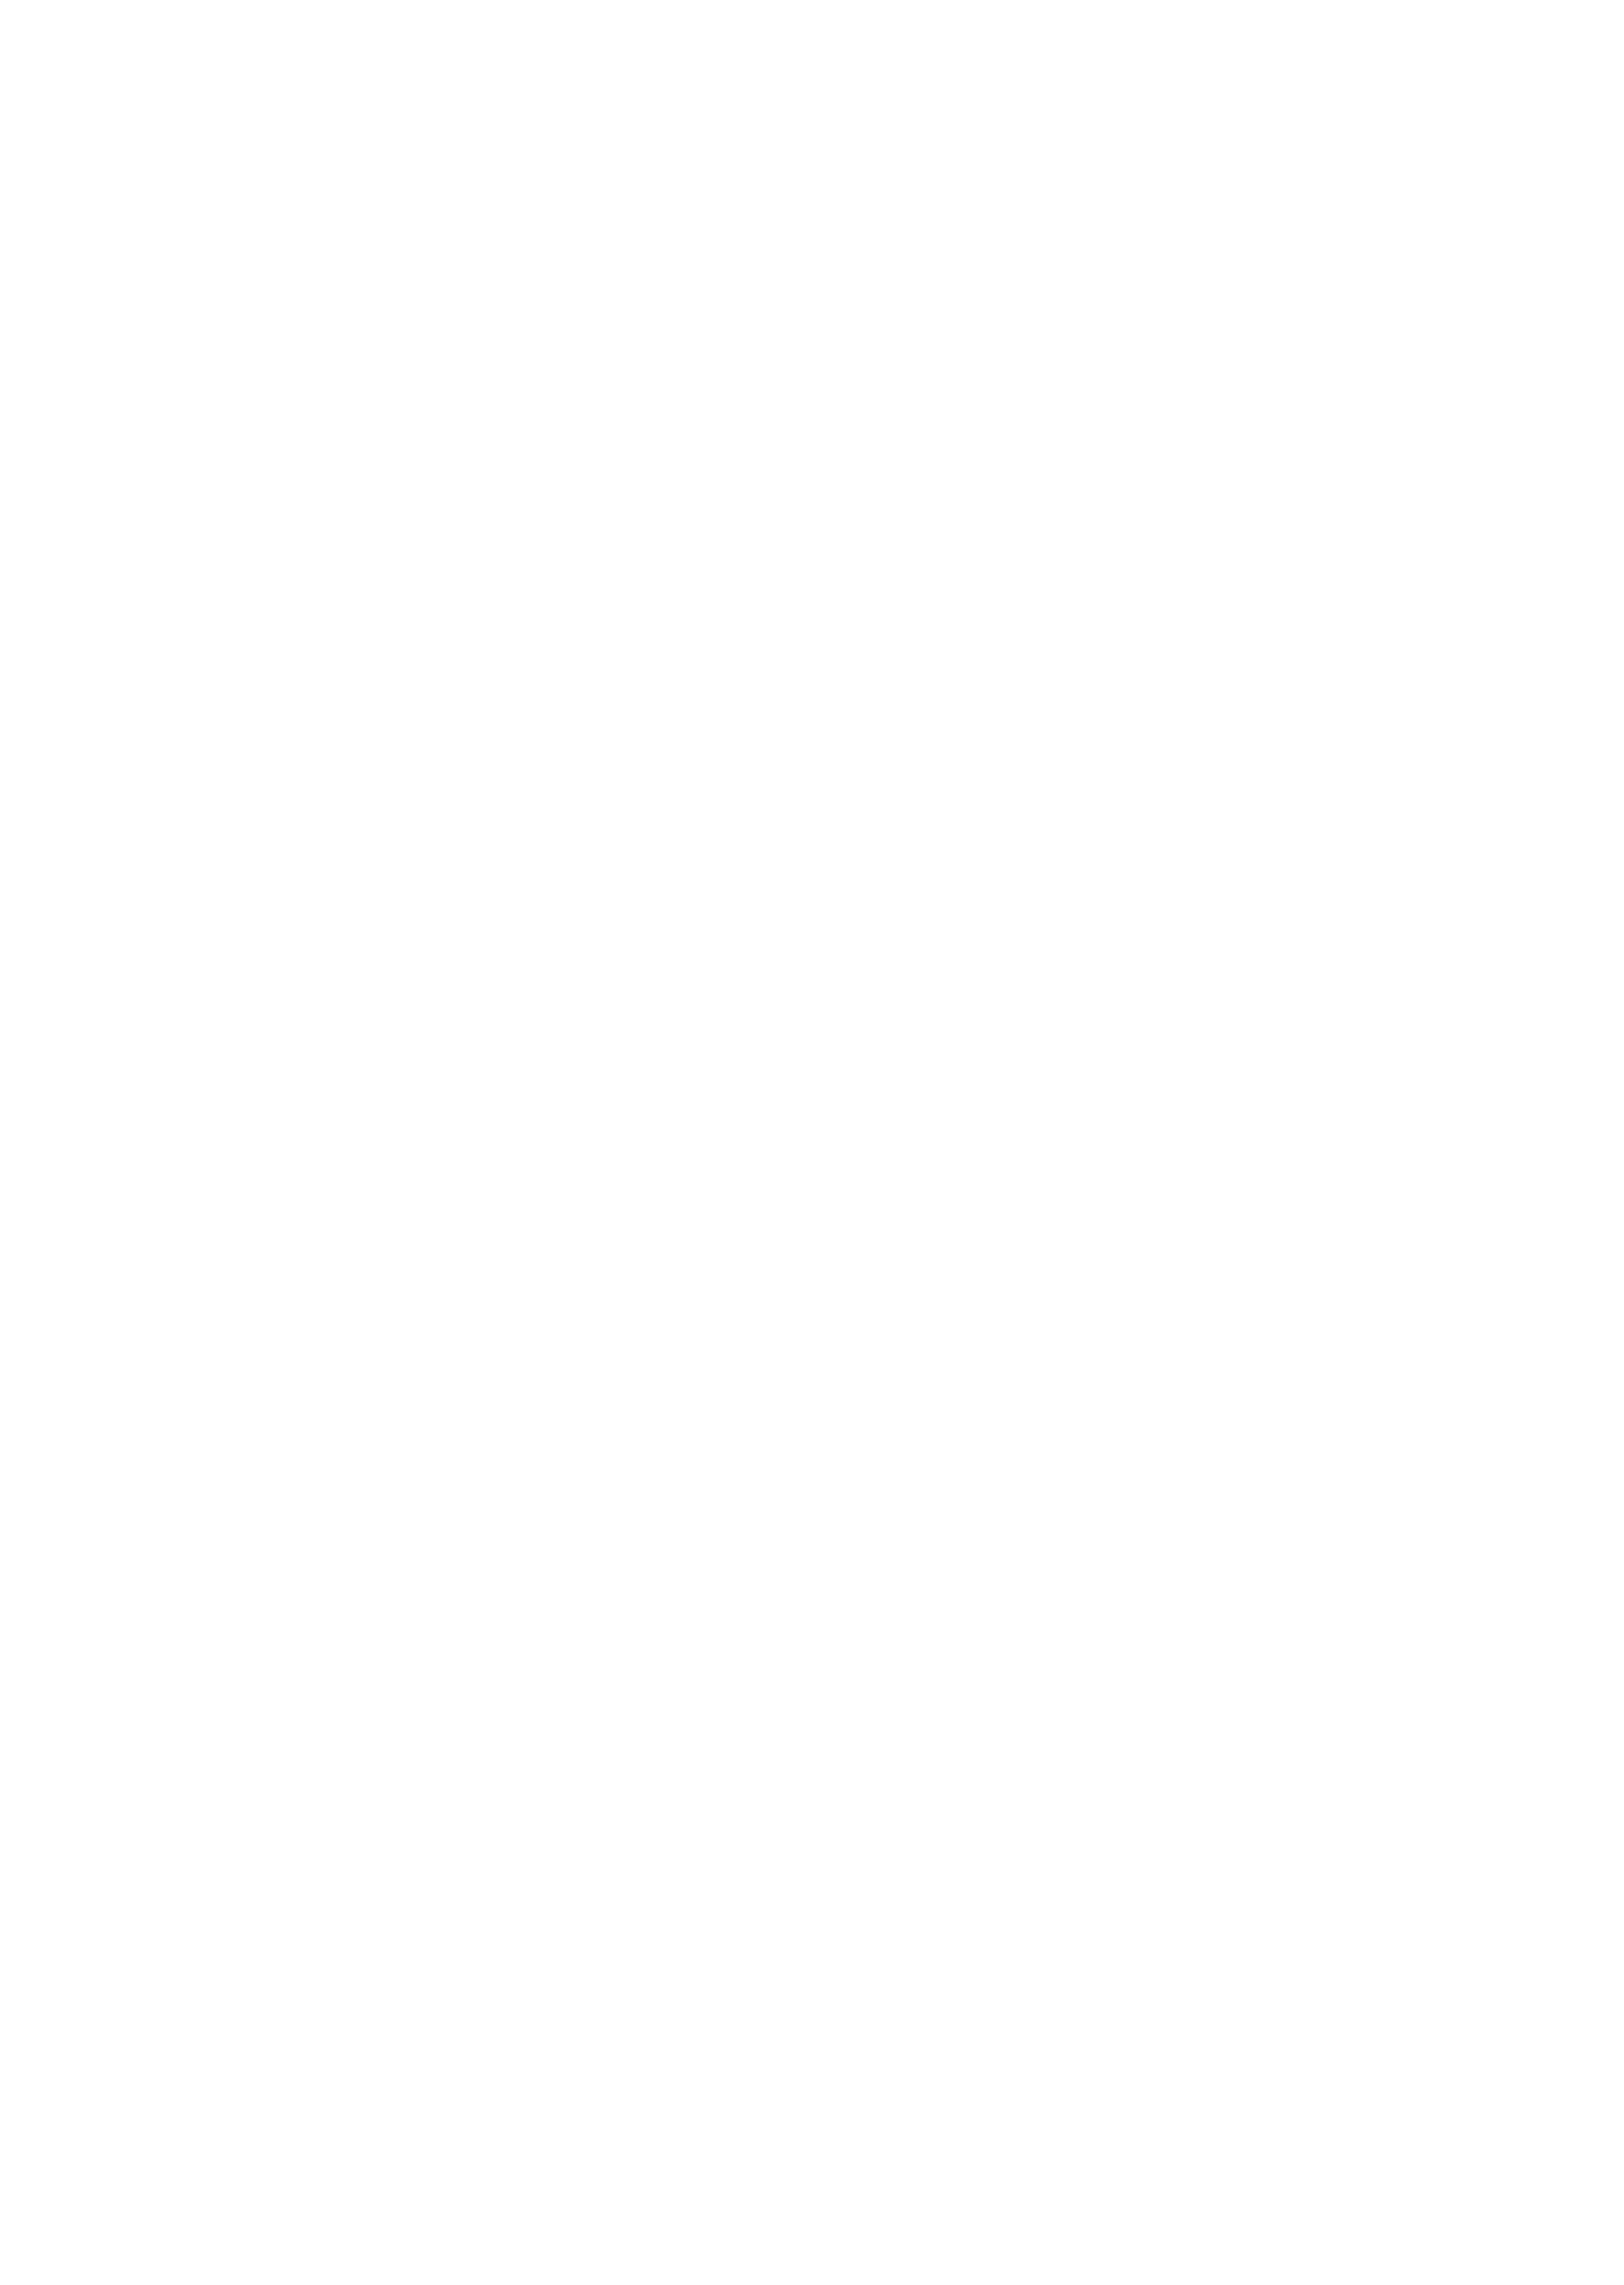 AE Service